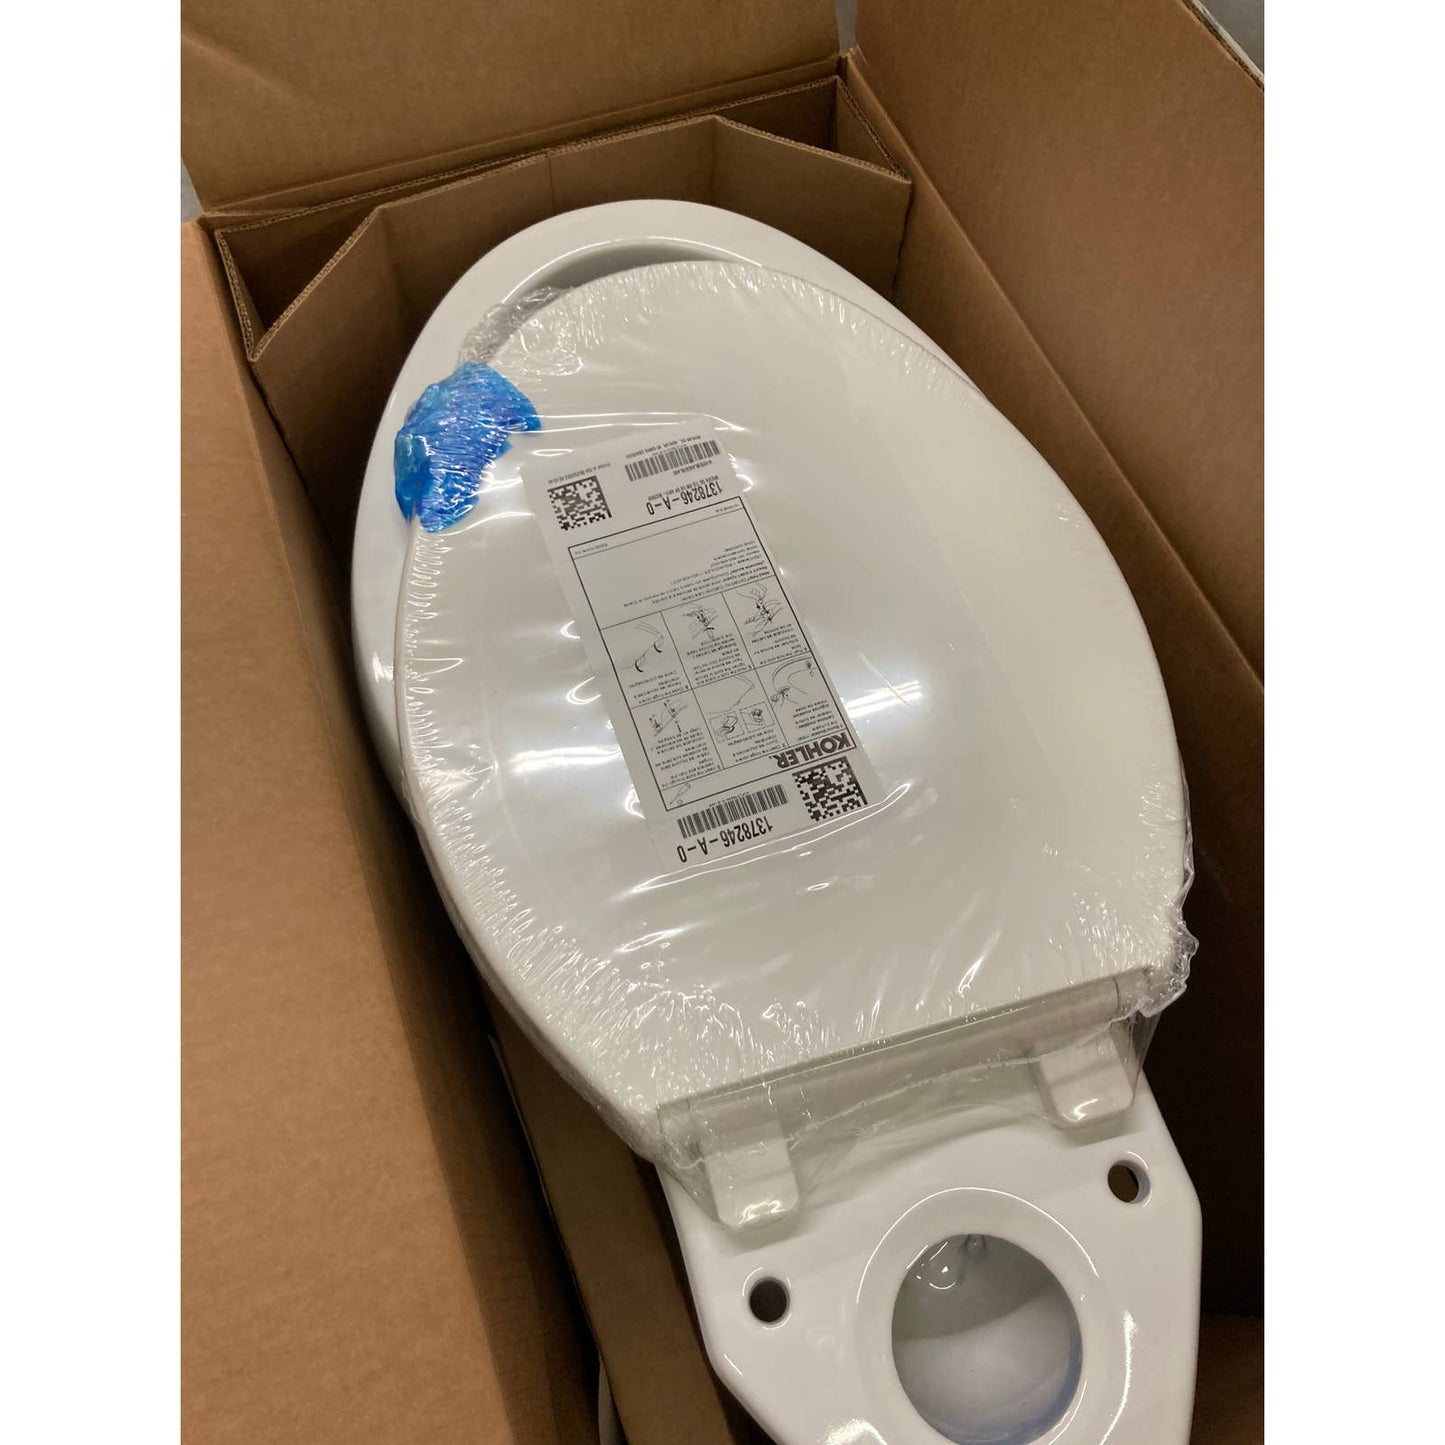 NEW - Kohler Comfort Height 2-Piece Elongated Toilet - Retail $199